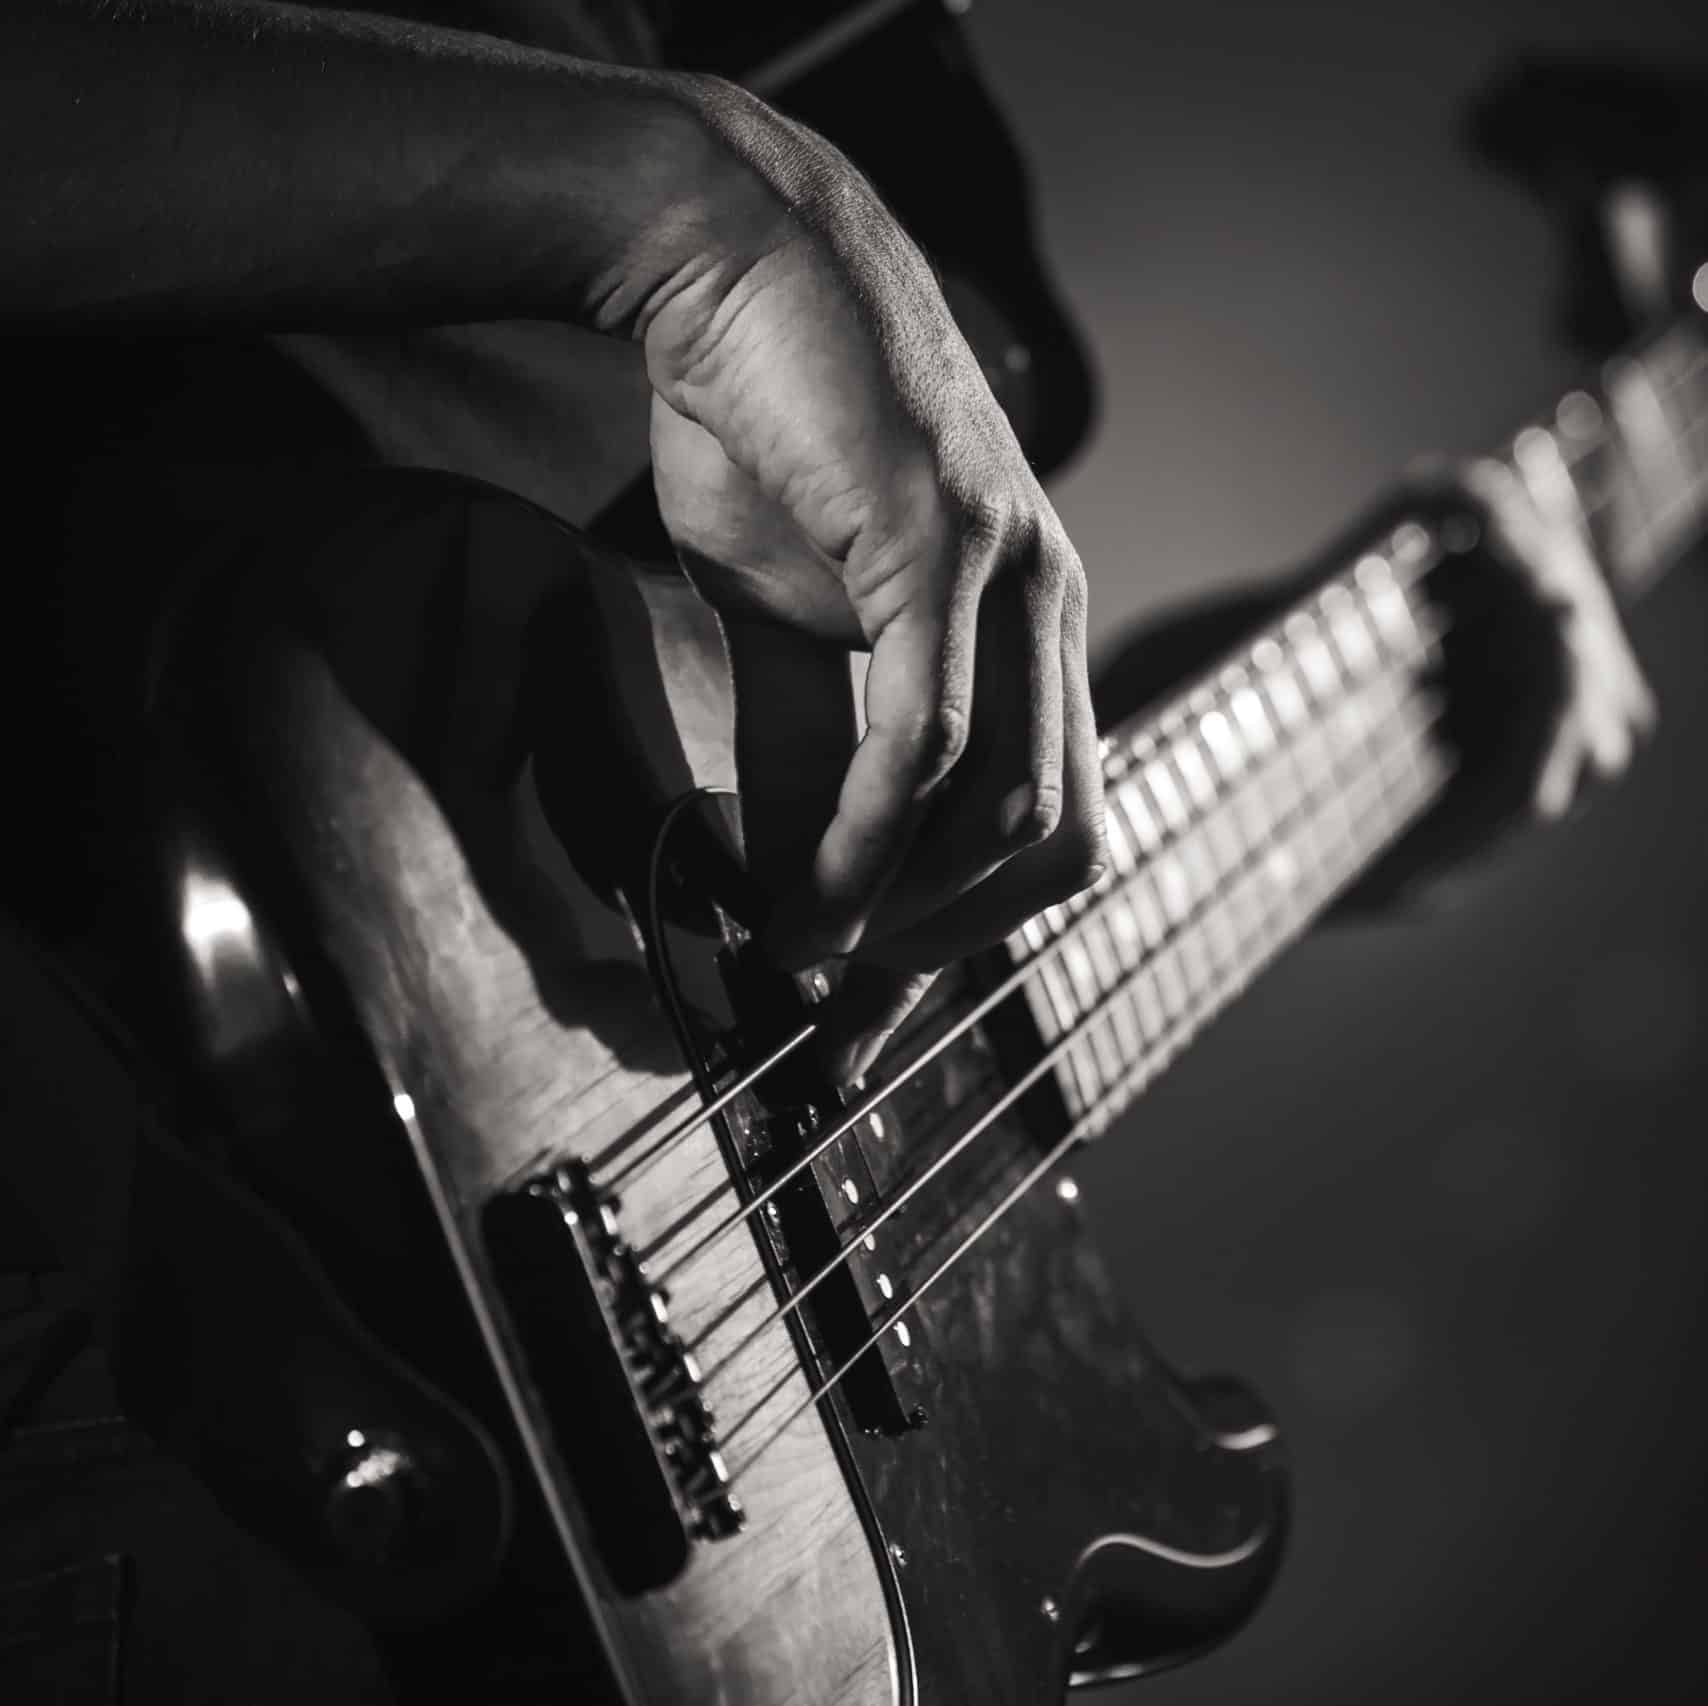 Electric bass guitar player hands, live music